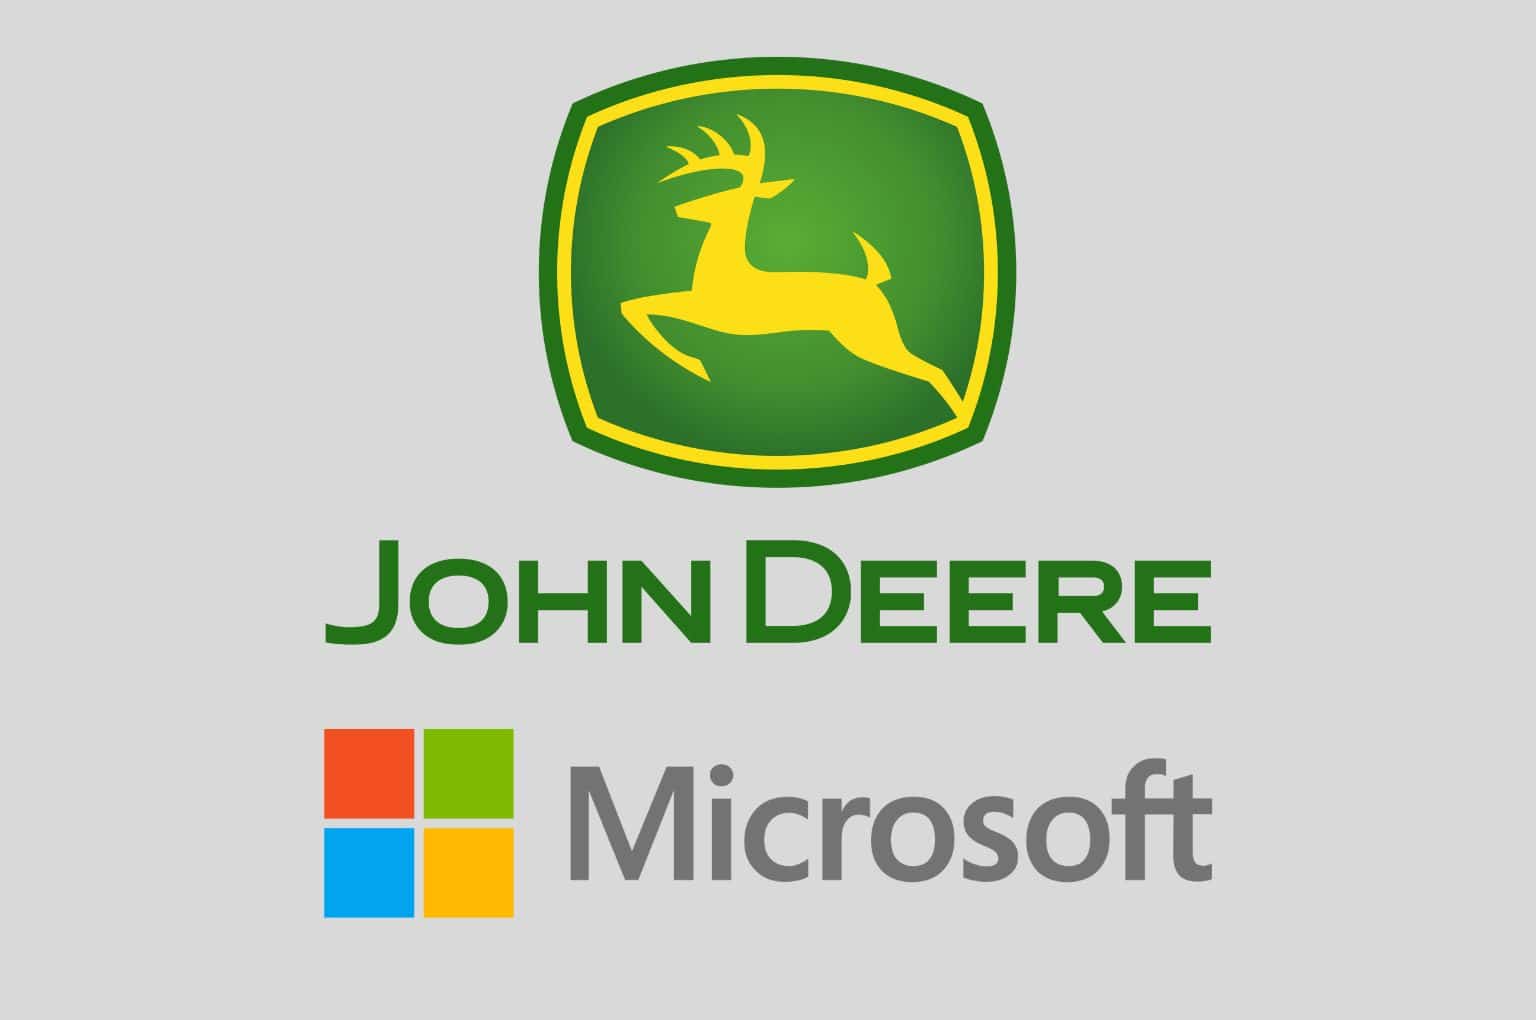 John Deere Microsoft